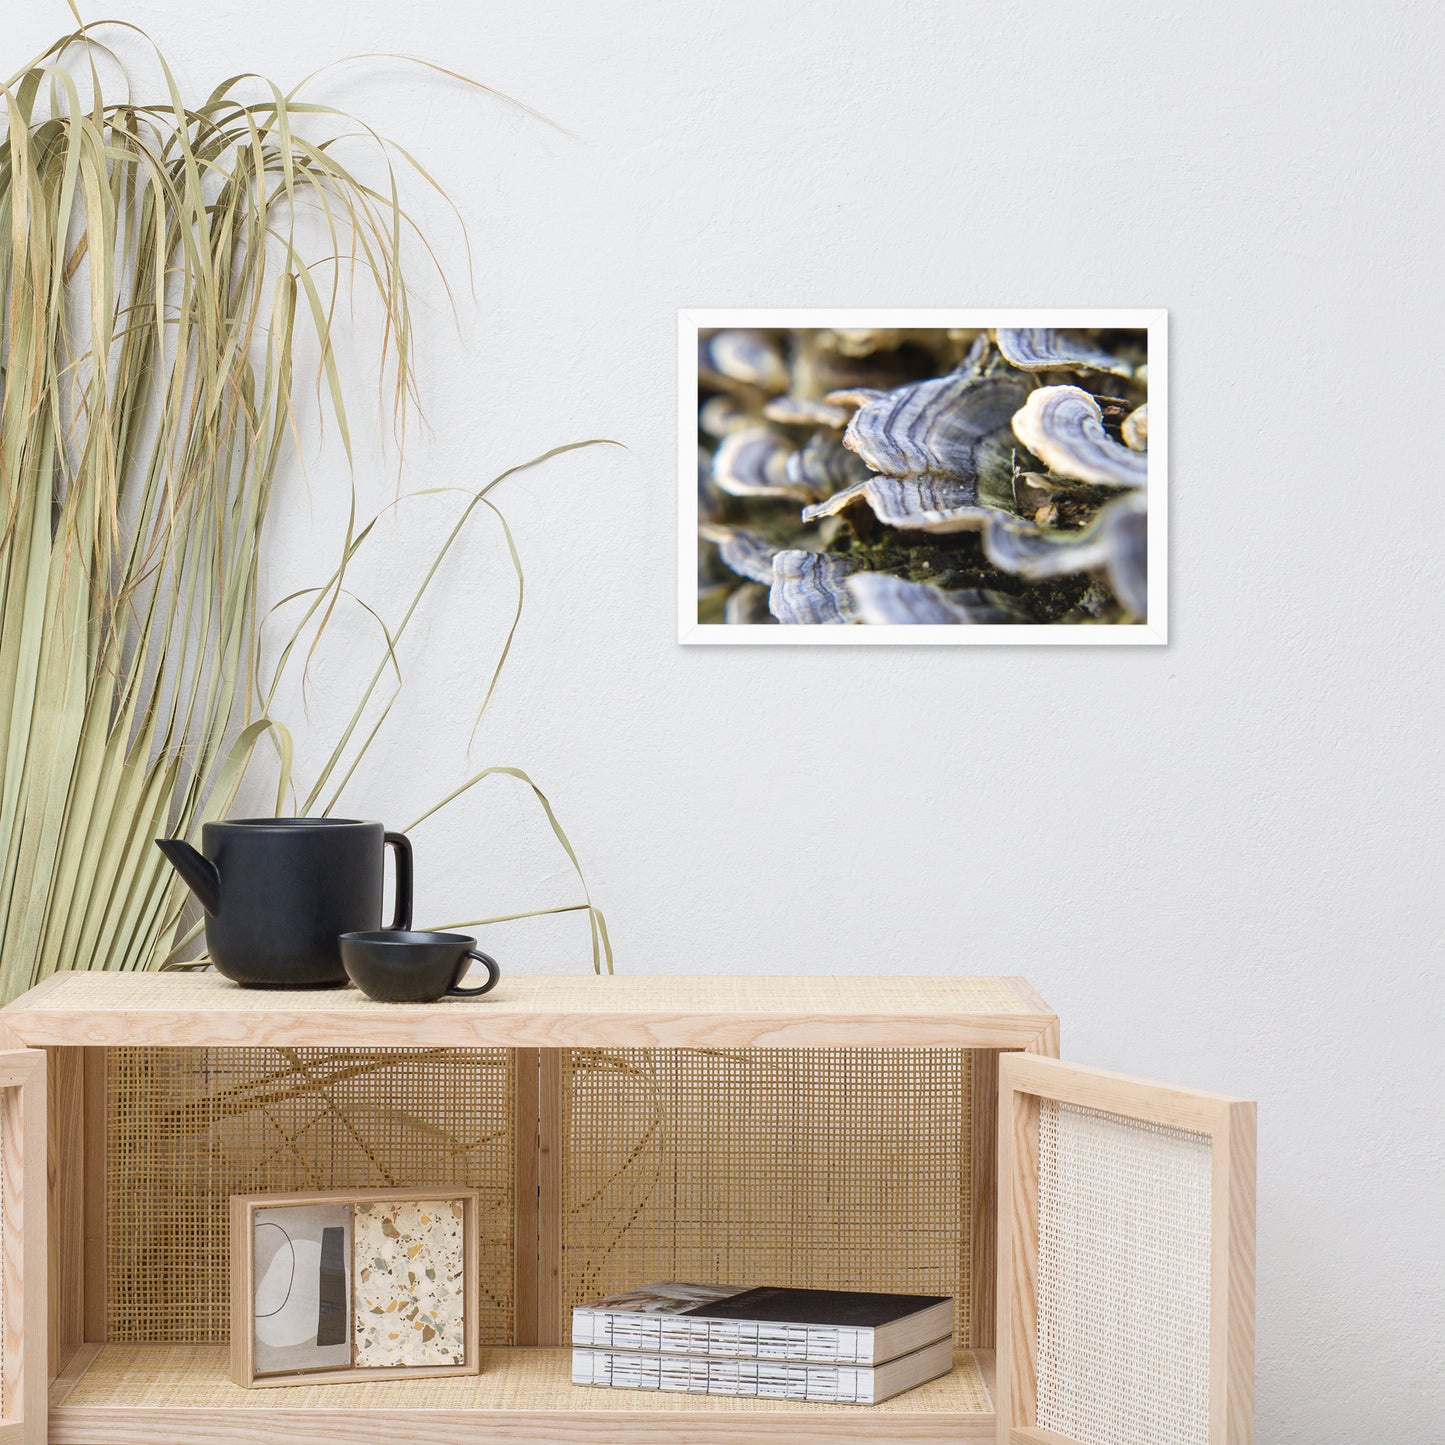 Mushrooms on Log Botanical Nature Photo Framed Wall Art Print